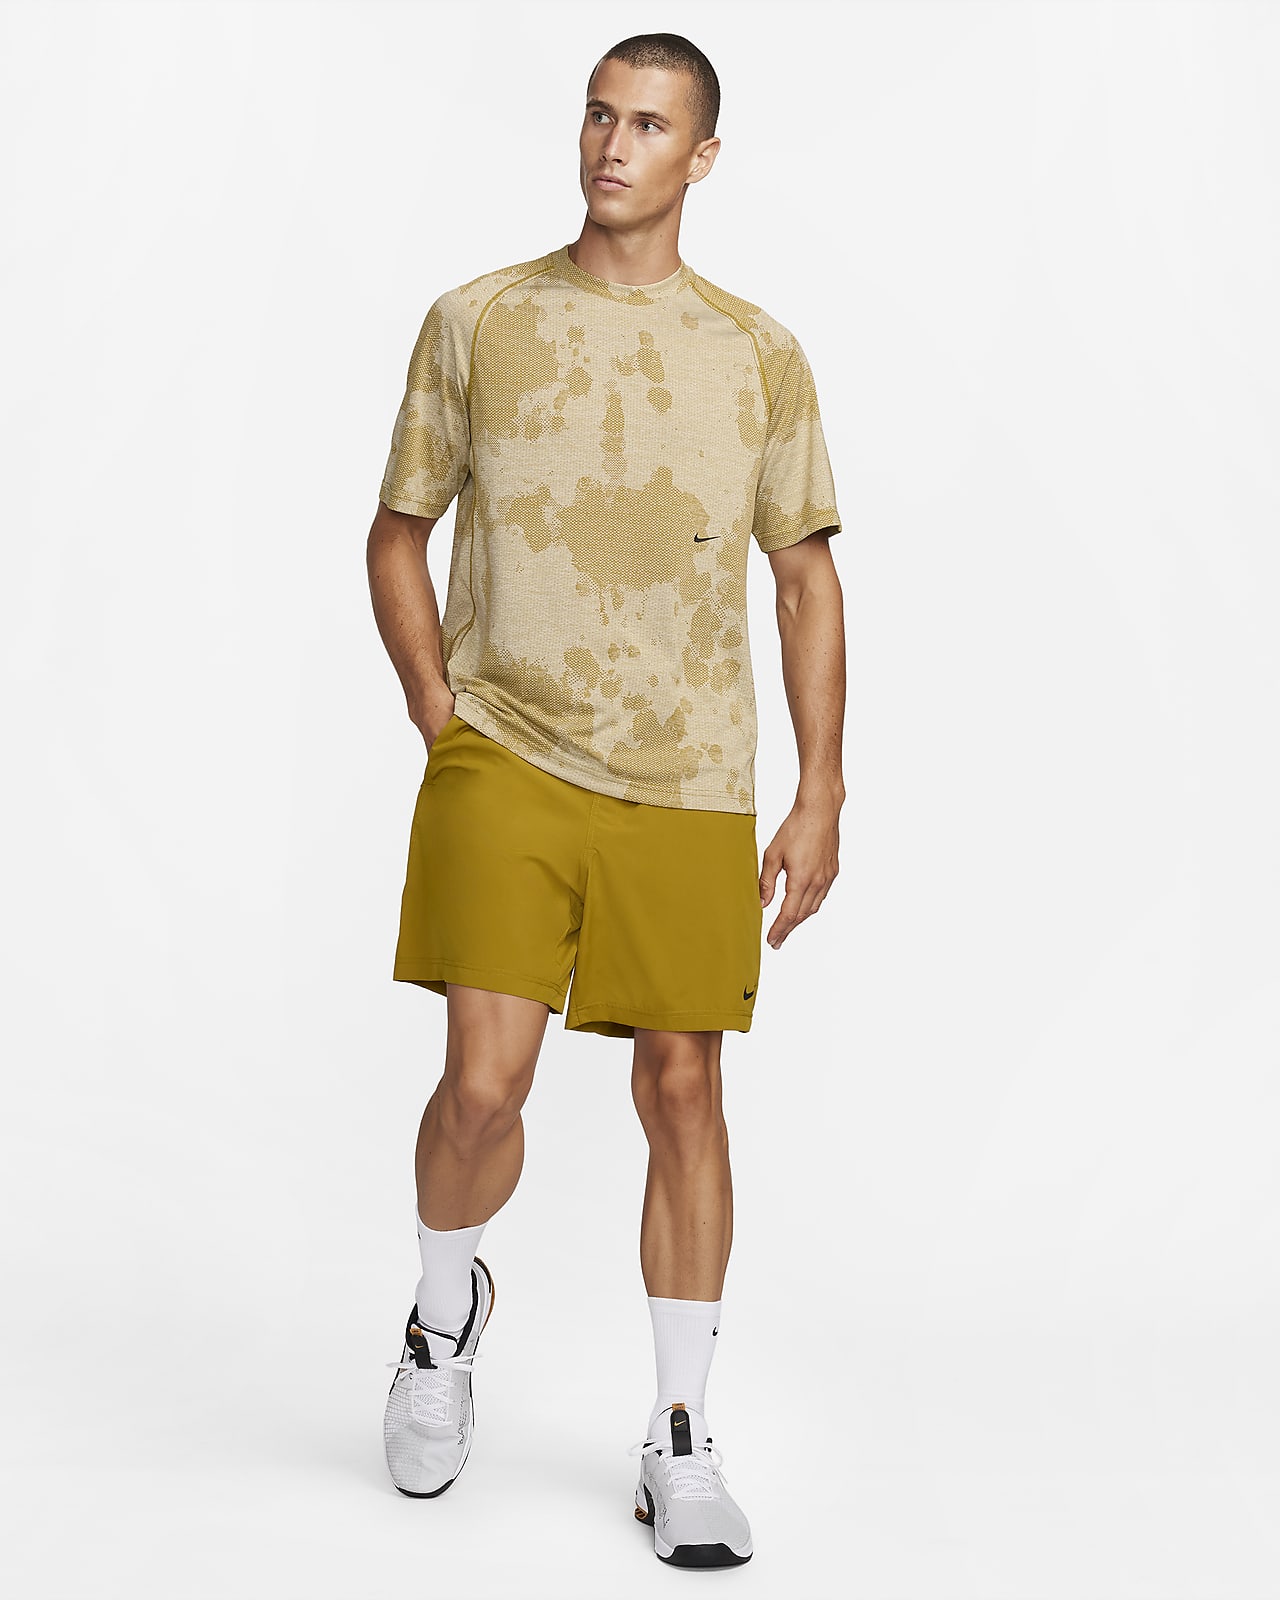 Nike Dri-FIT ADV APS Men's Engineered Short-Sleeve Fitness Top